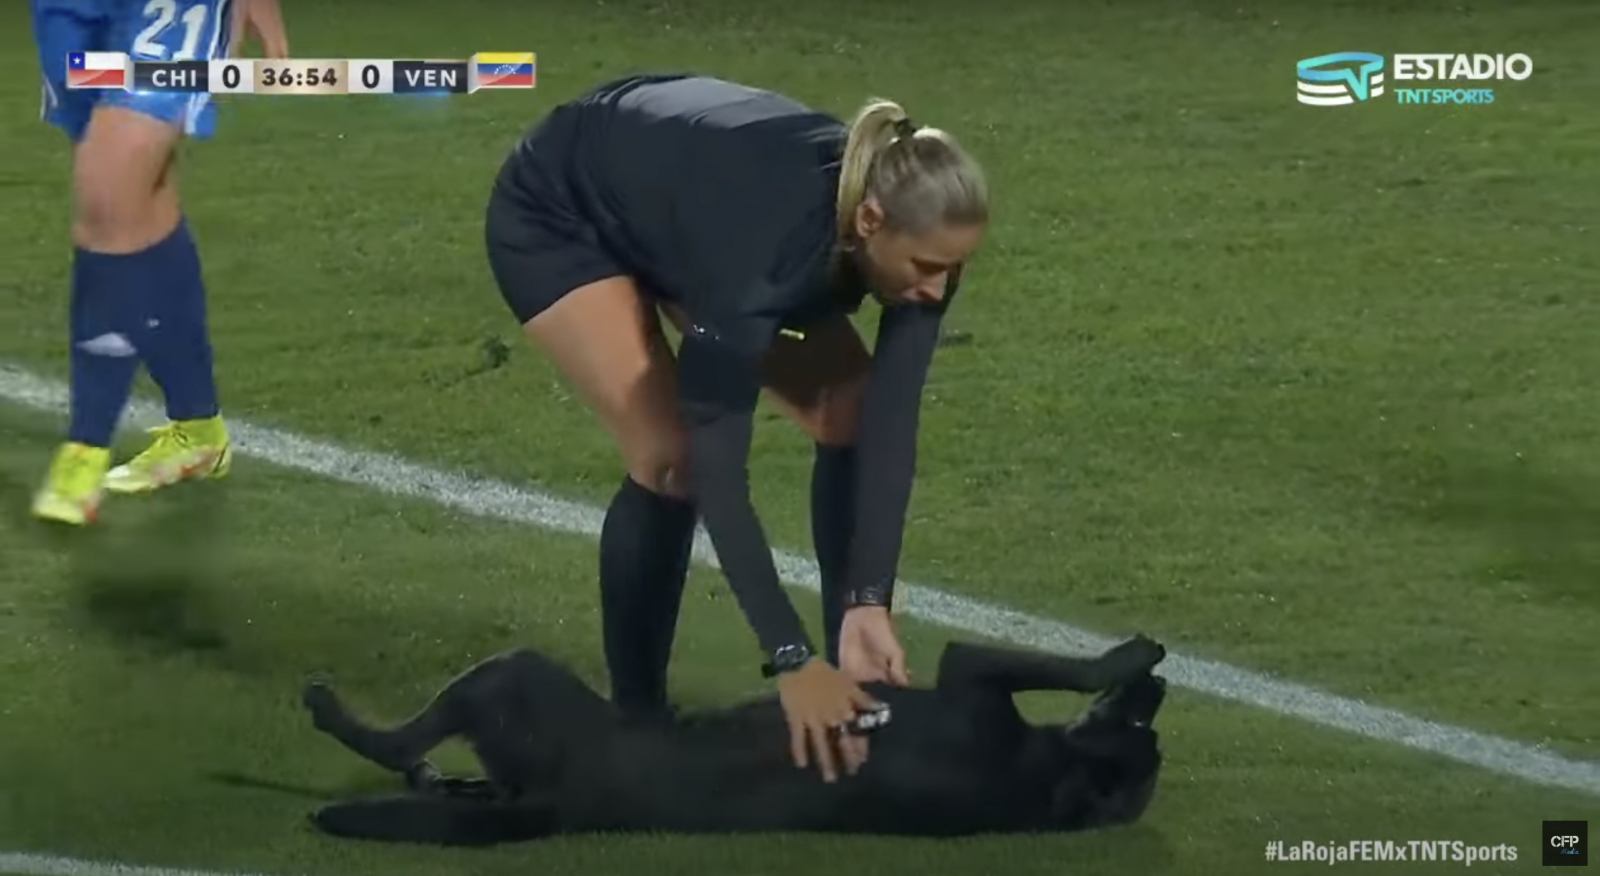 Dog getting belly rubs on soccer field